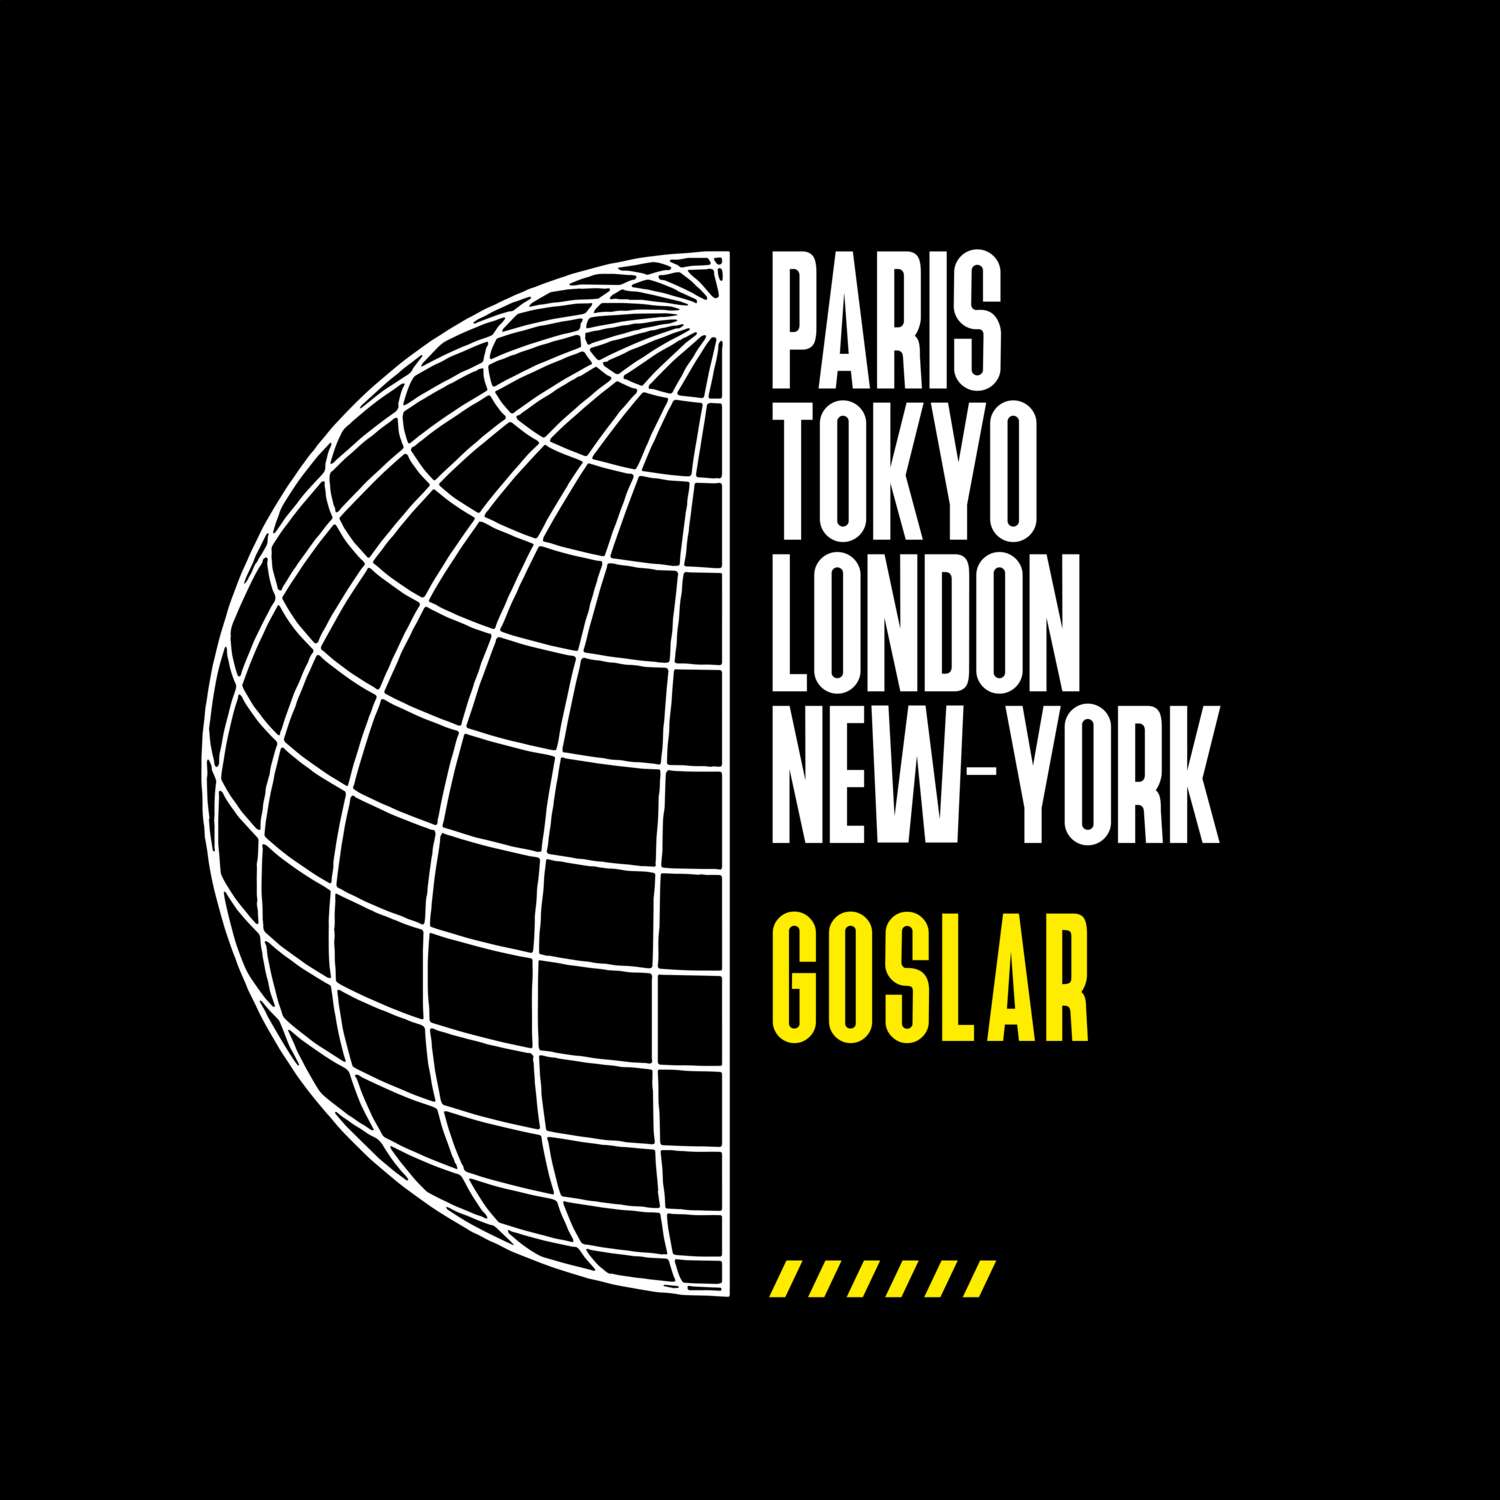 Goslar T-Shirt »Paris Tokyo London«